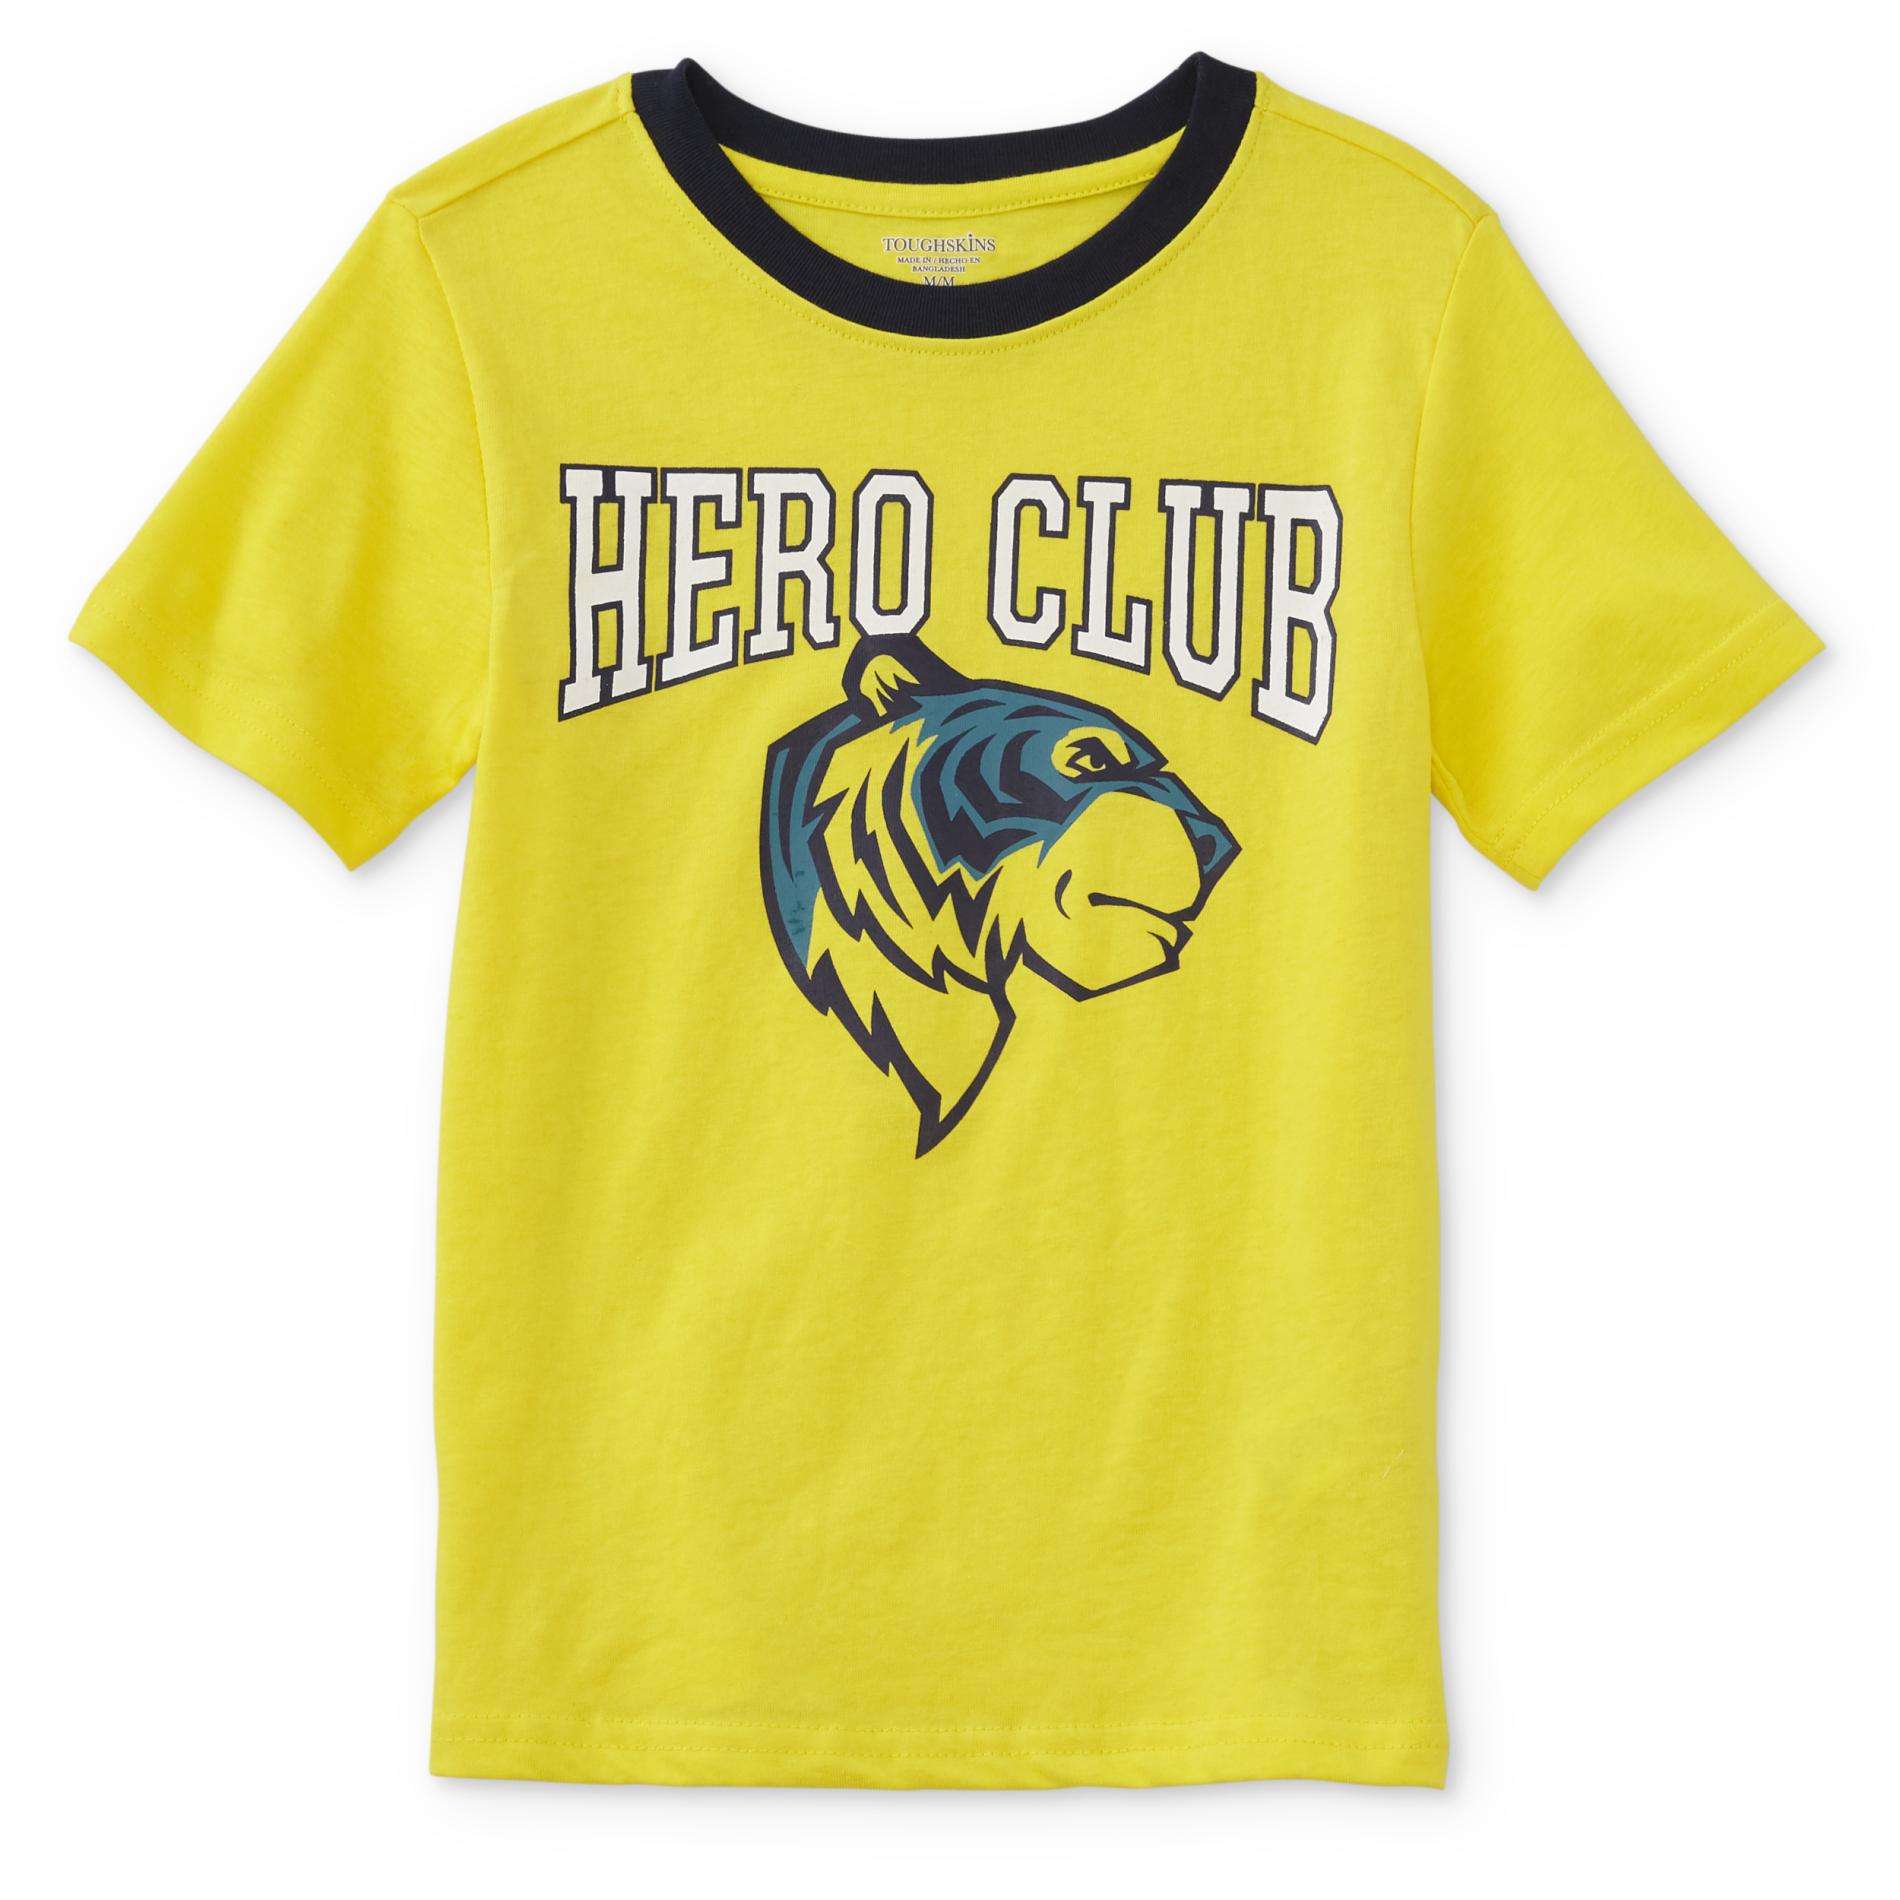 Toughskins Boys' Graphic T-Shirt - Hero Club